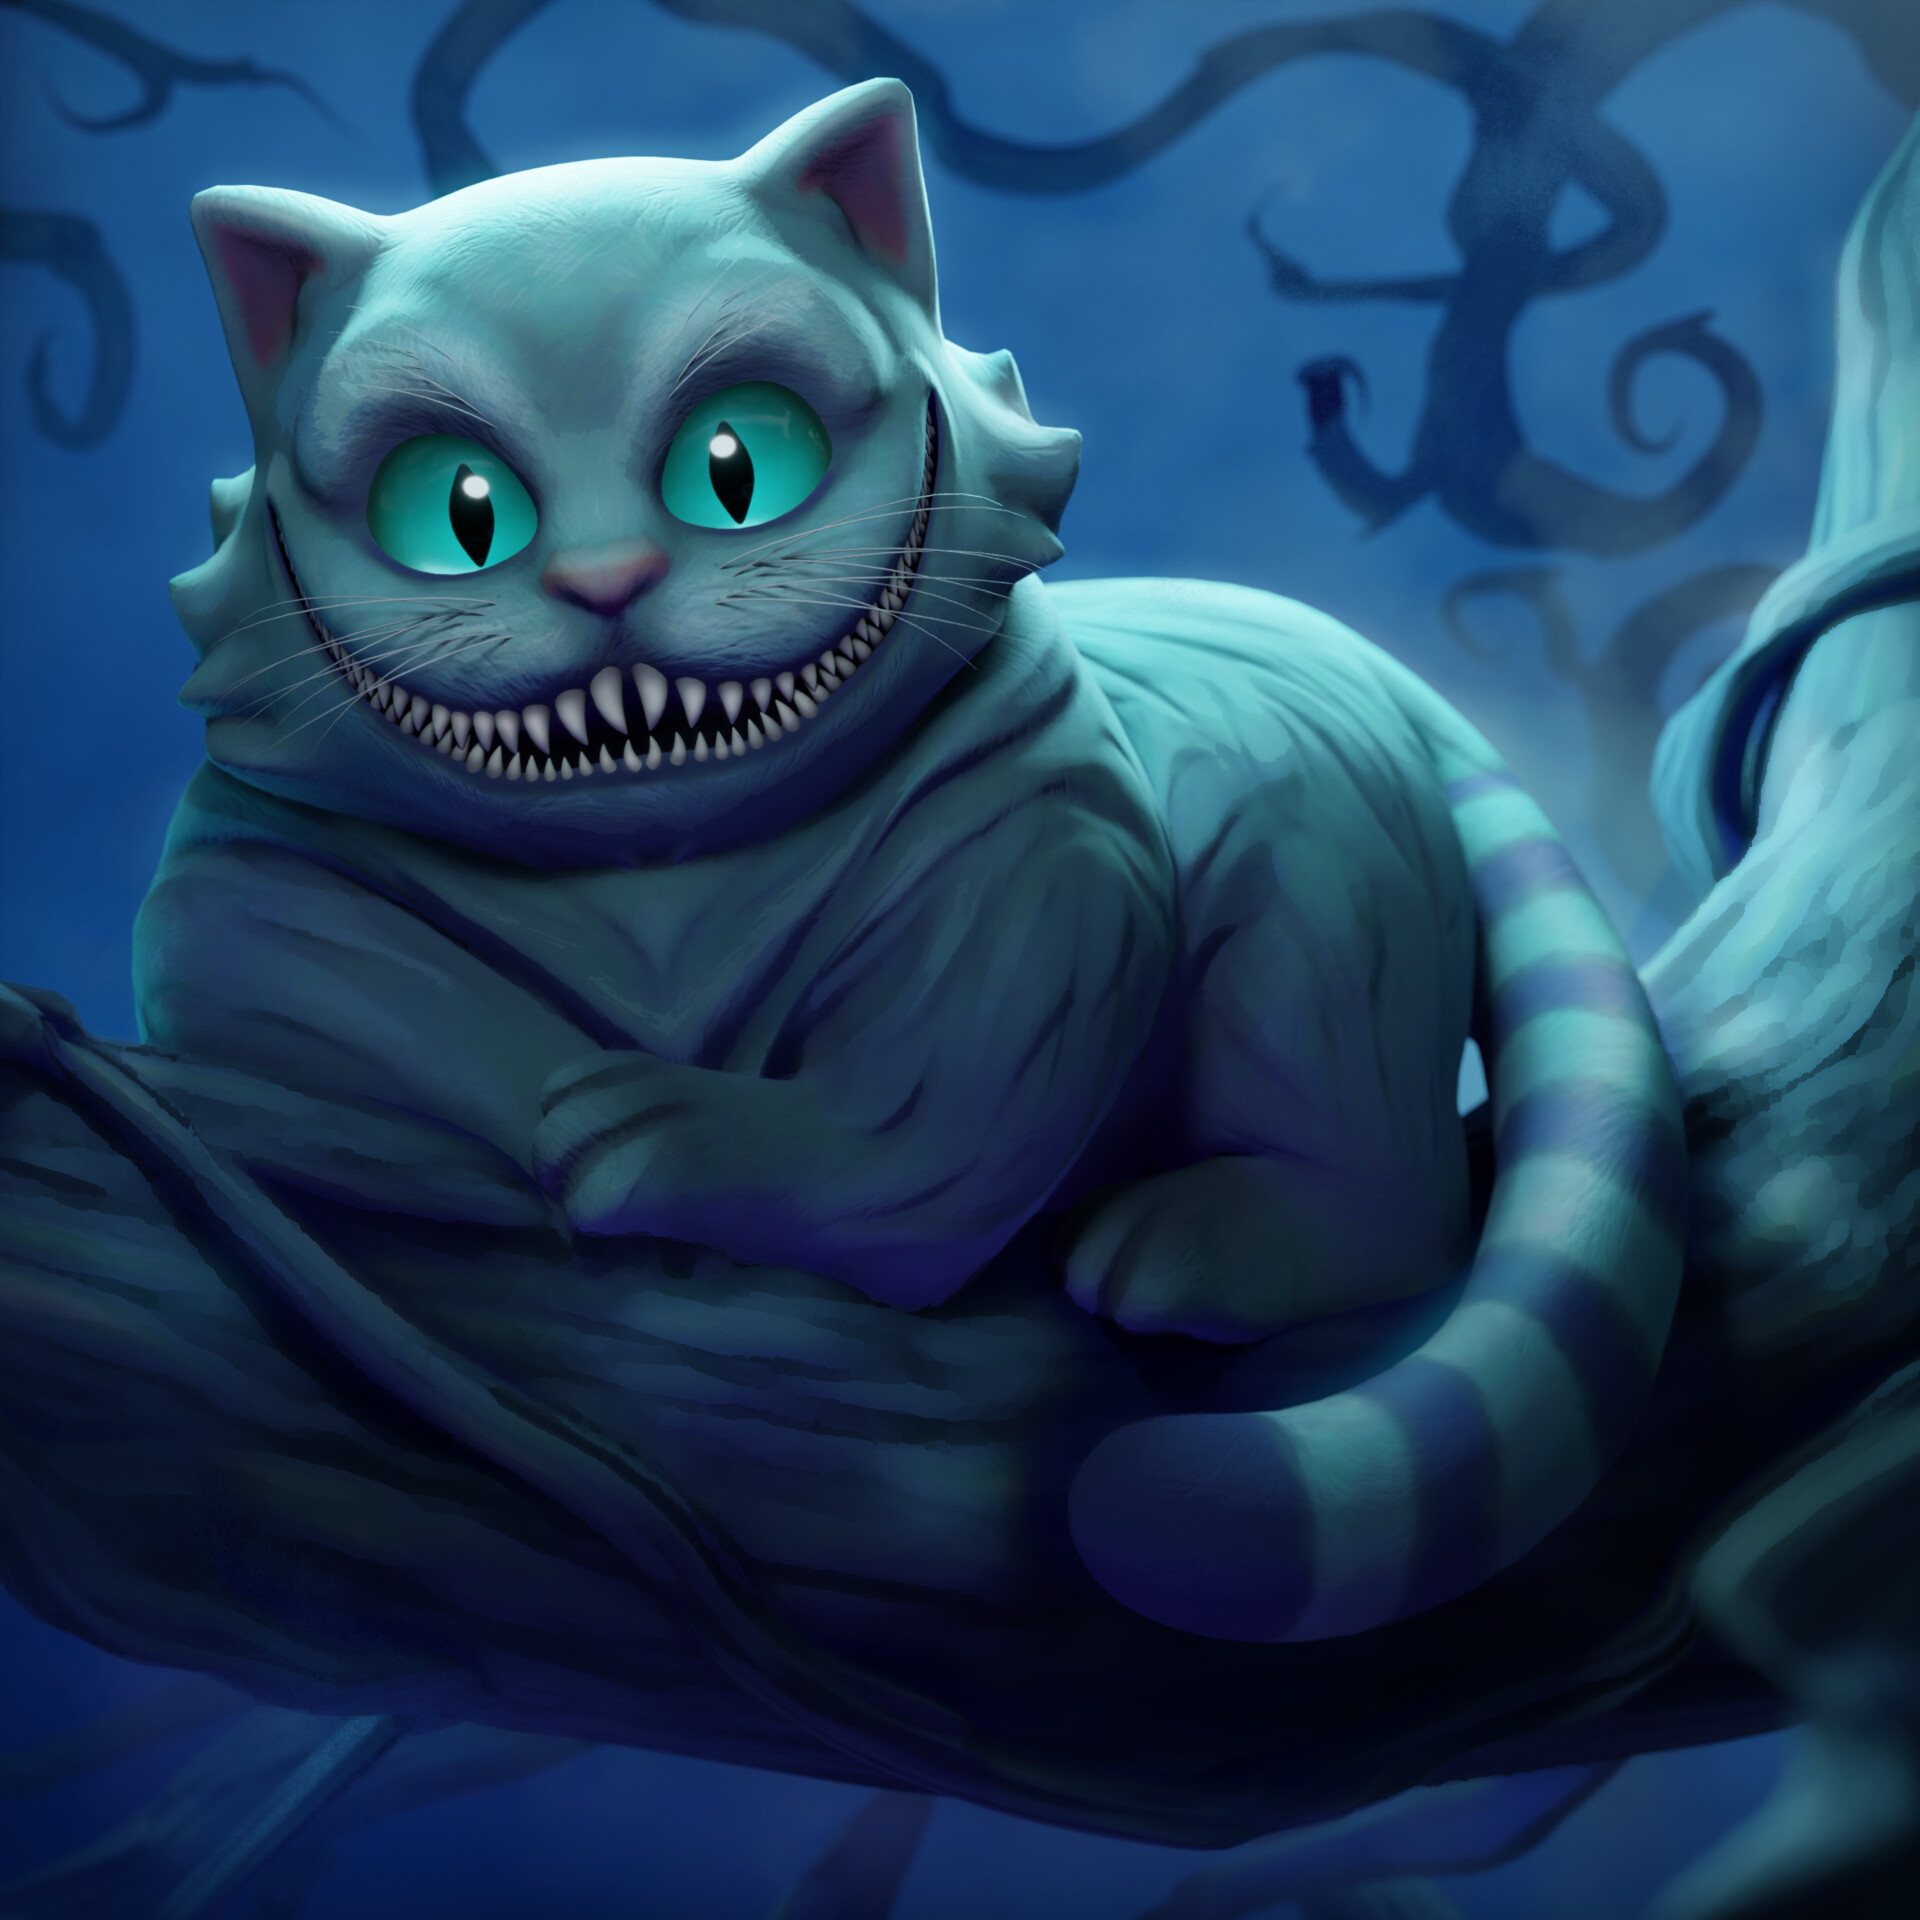 ArtStation - Cheshire Cat from Alice in Wonderland